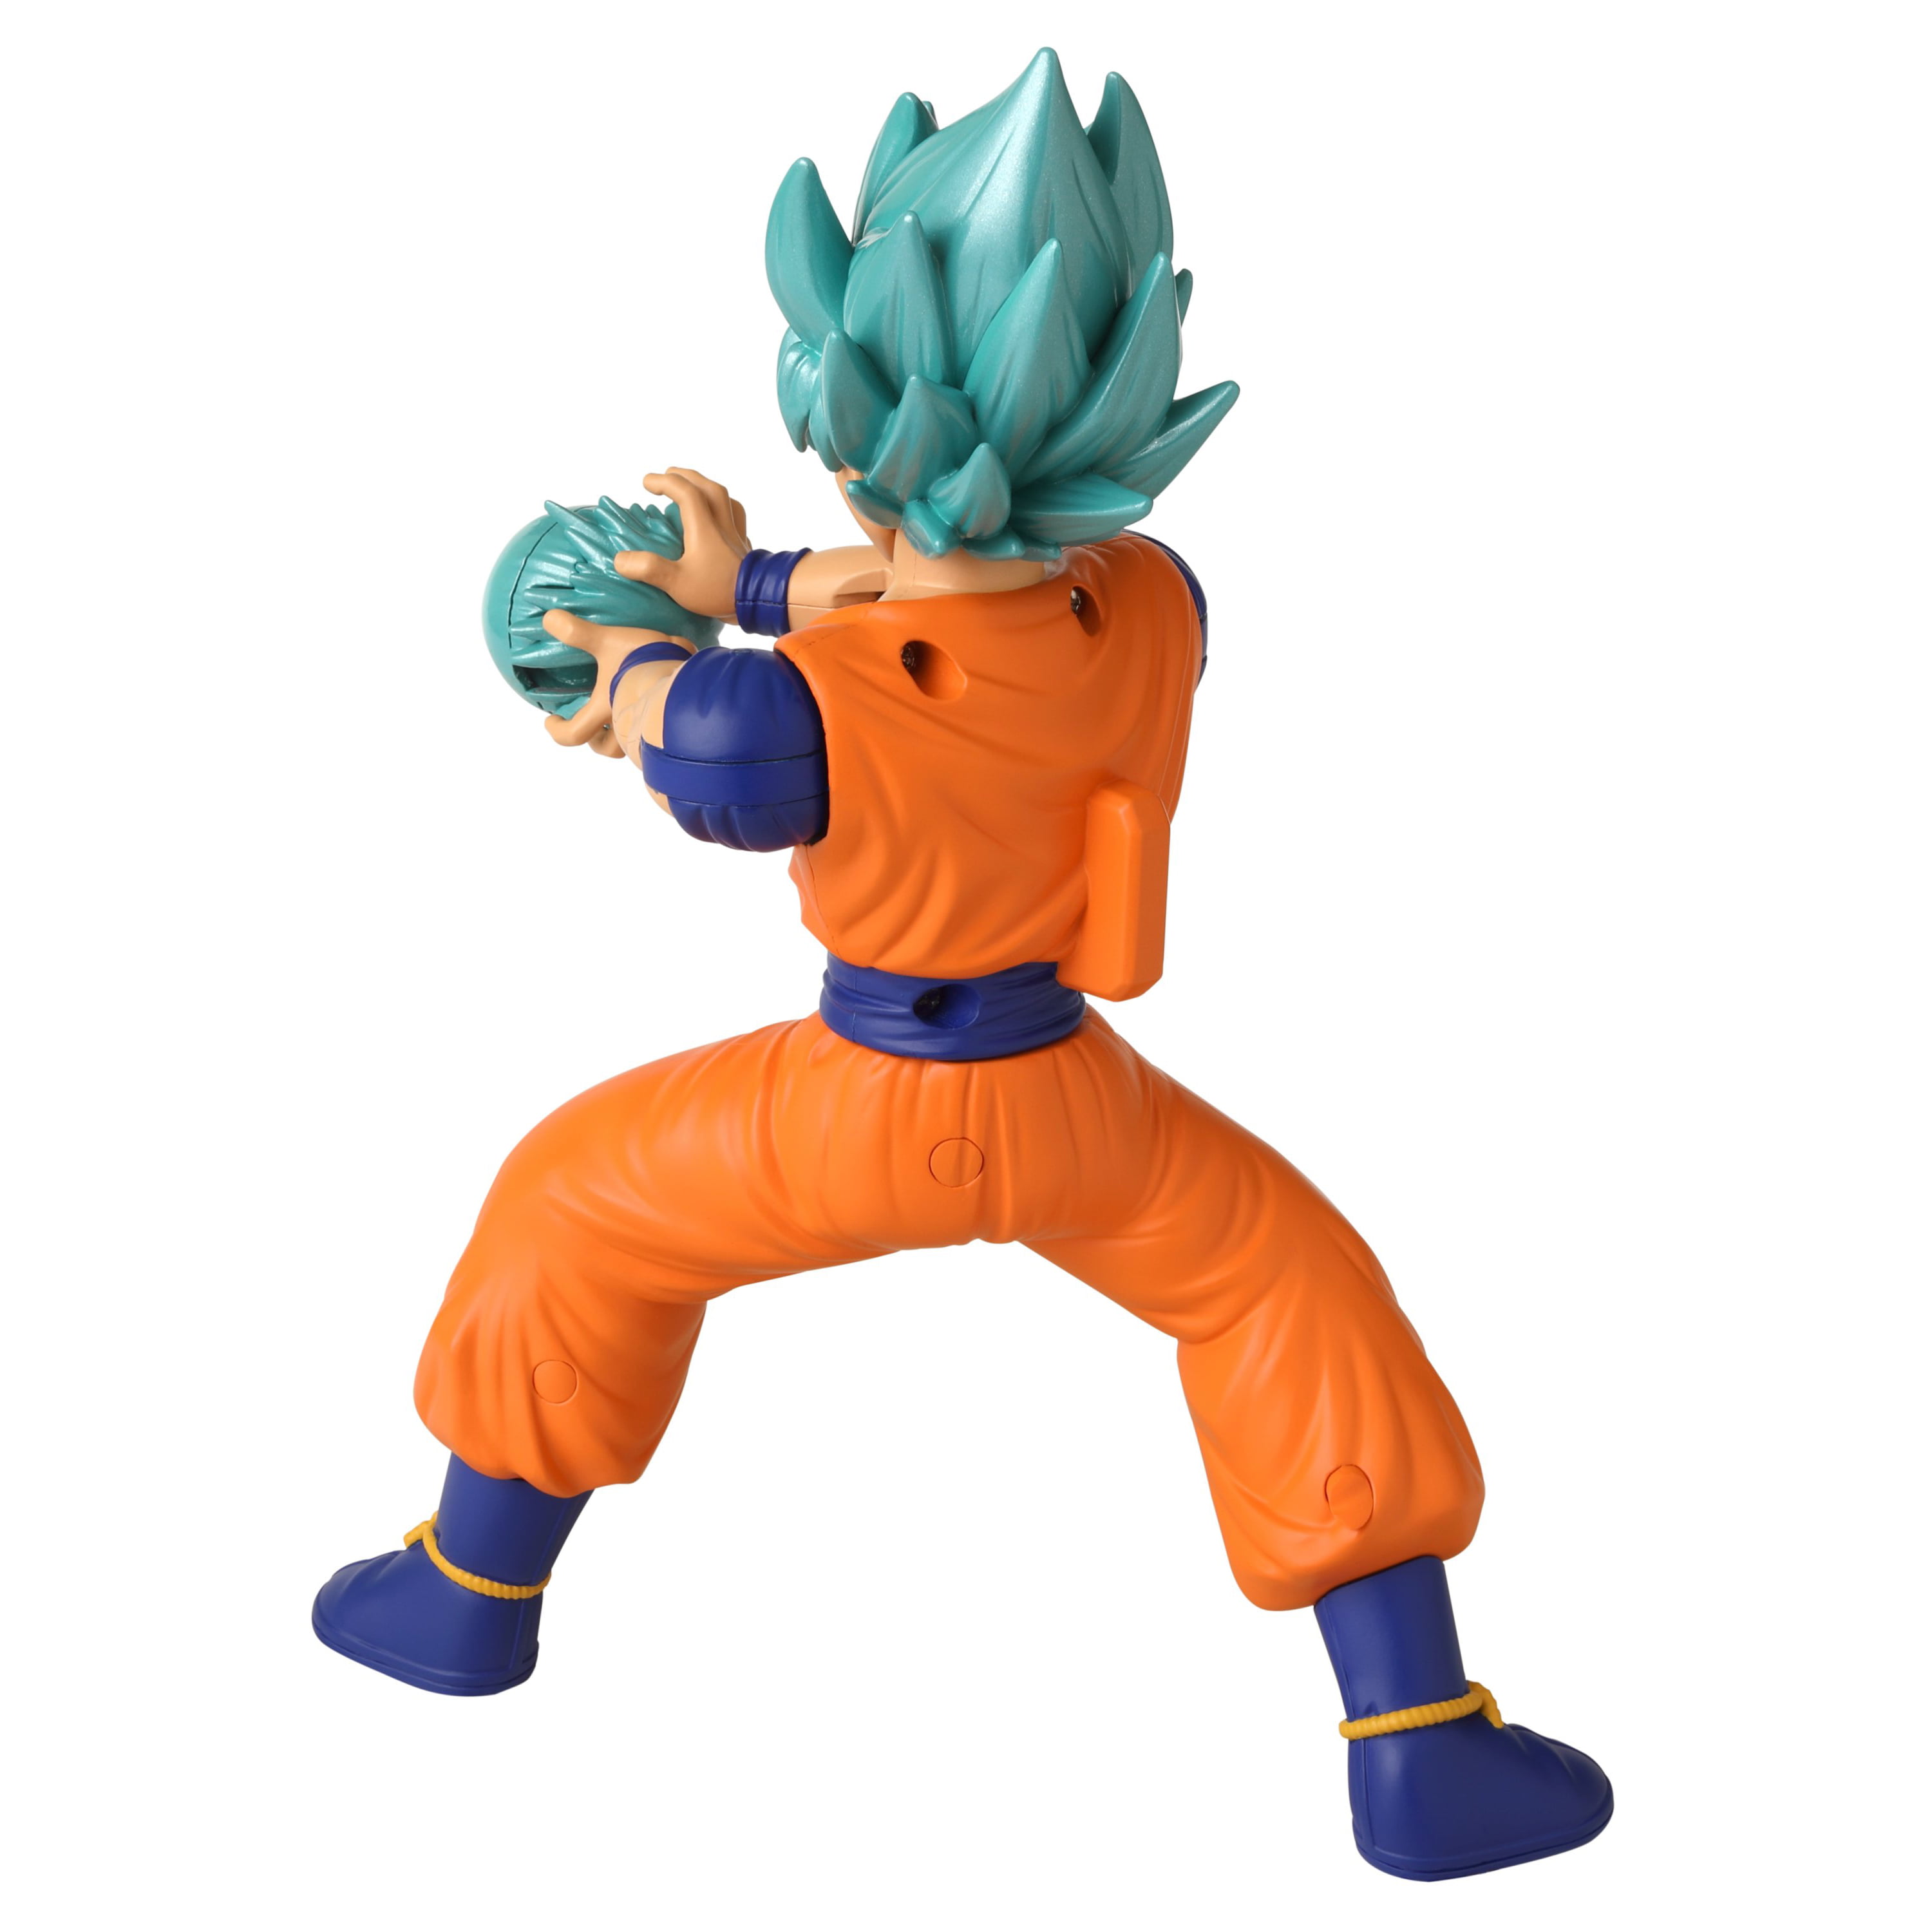 Boneco Goku Super Sayajin Blue Dragonball